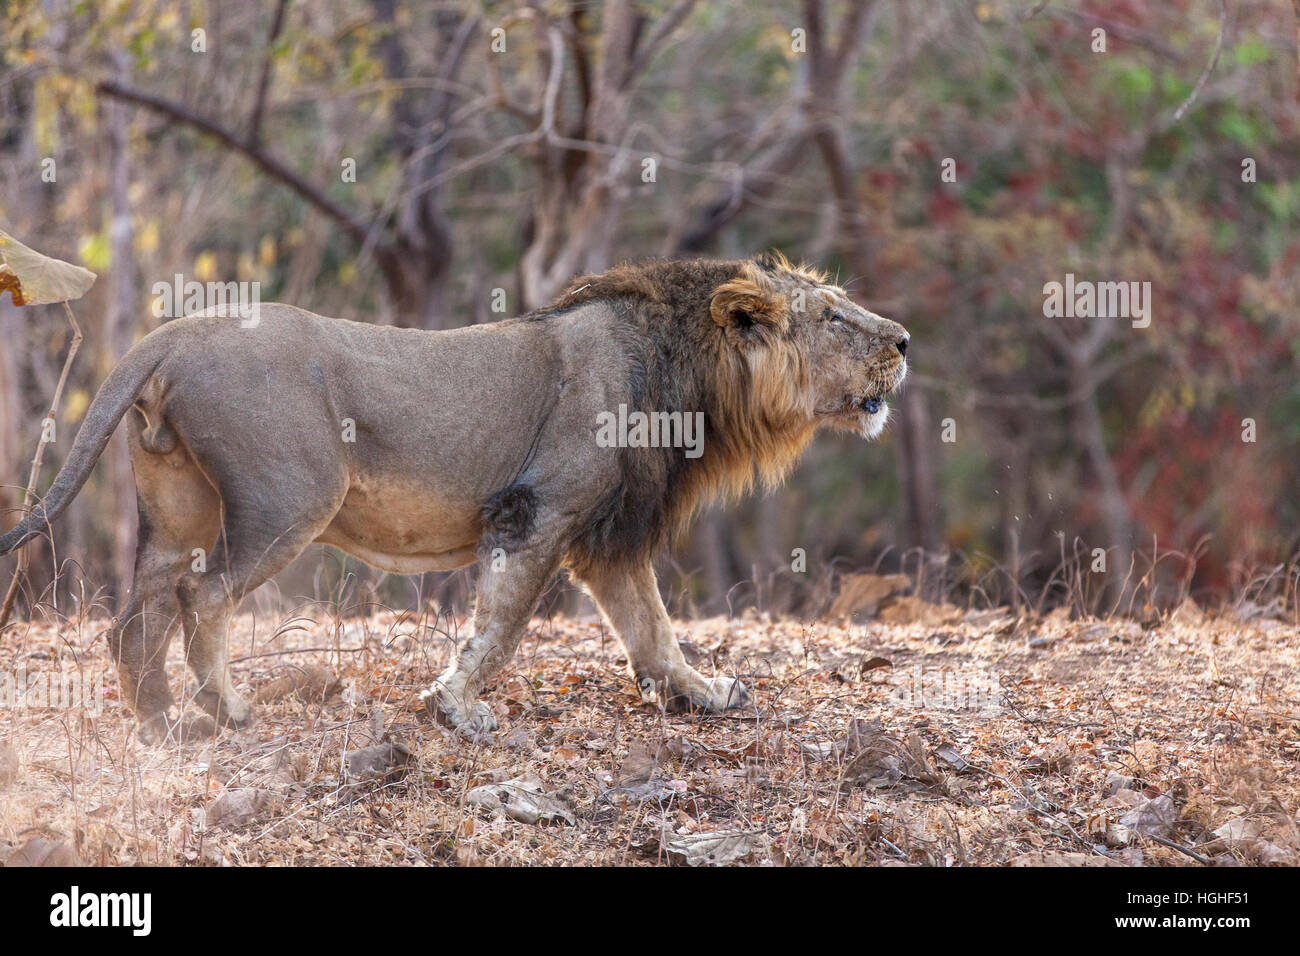 Lion d'Asie (Panthera leo persica) à Rif forêt, Gujarat, Inde. Banque D'Images